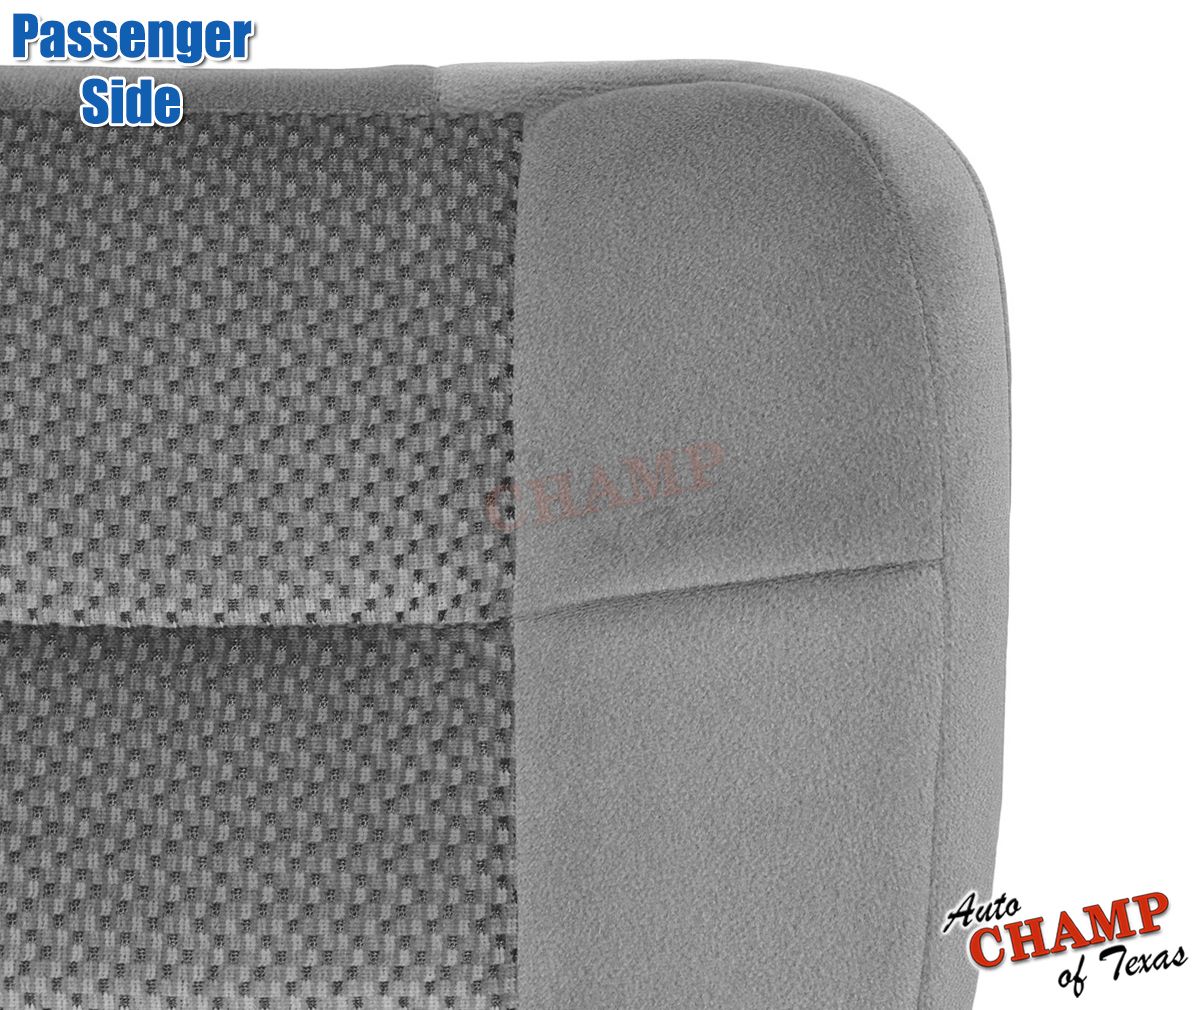  photo 2003-F150-XLT-Quad-Super-Cab-X-Cab-Passenger-Side-Bottom-Cloth-Seat-Cover-Med-Graphite-9_zpsmhlxvdpm.jpg